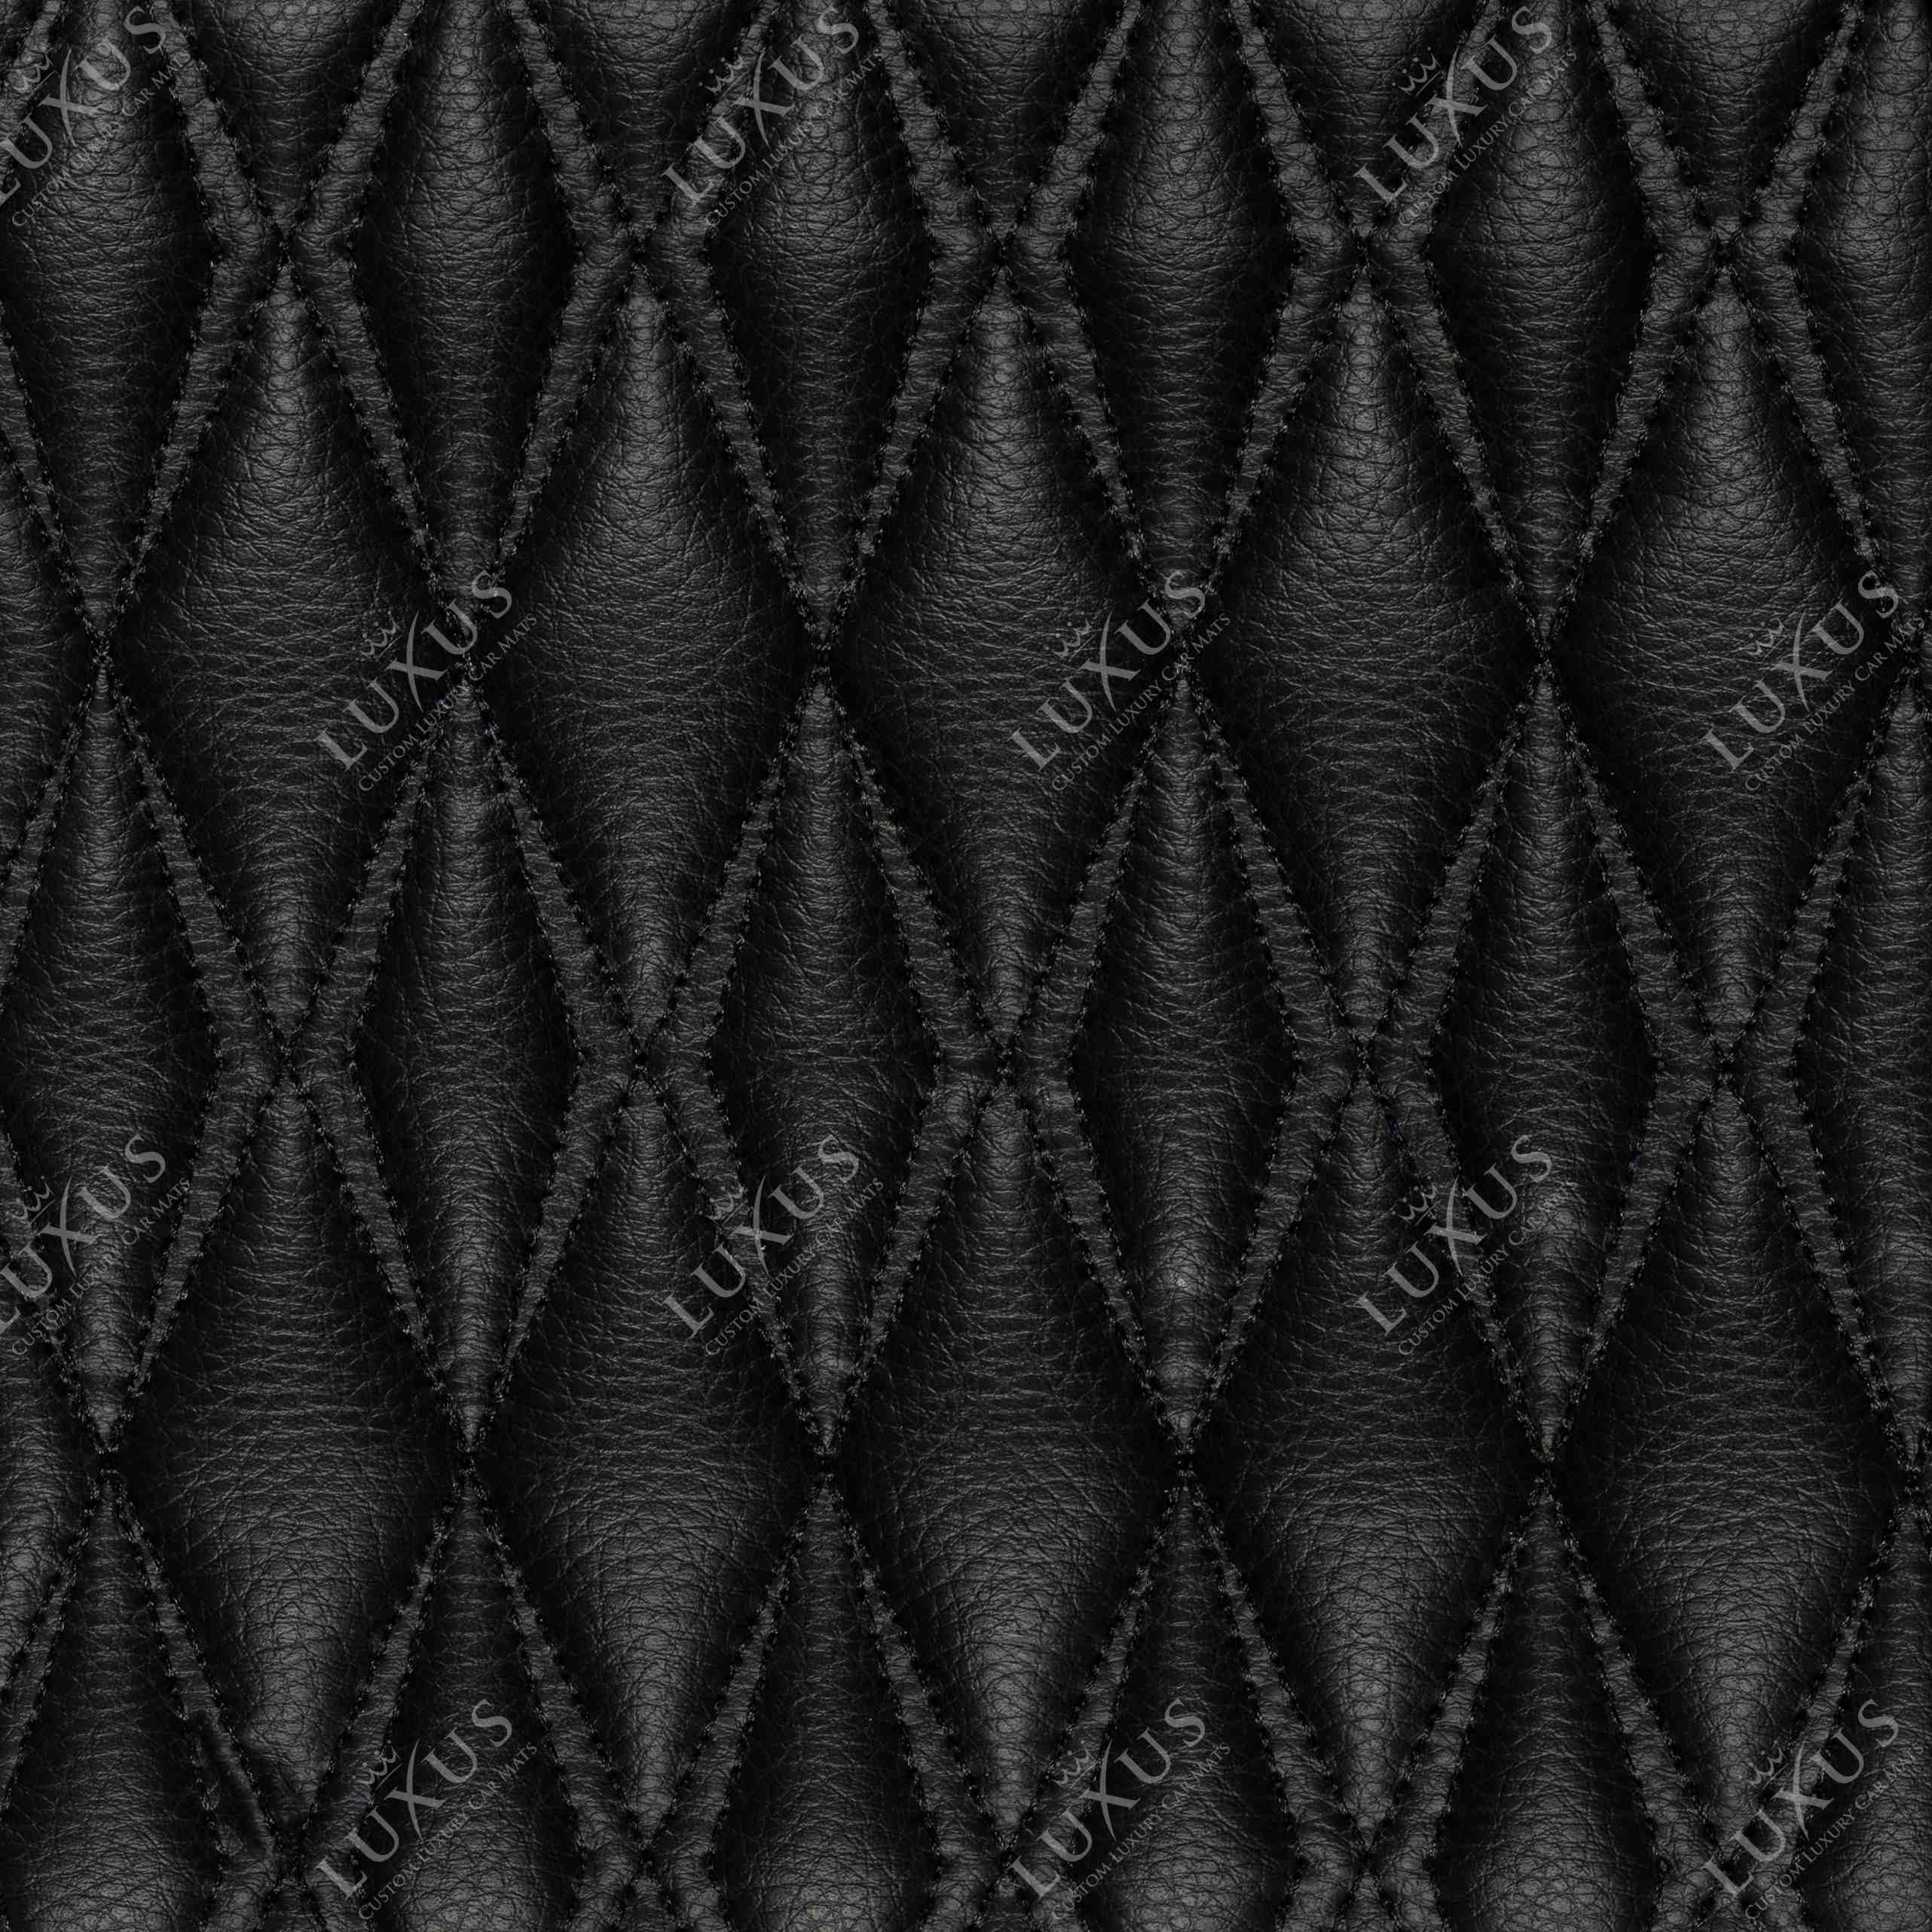 Black & Black Stitching Twin-Diamond Luxury Boot/Trunk Mat